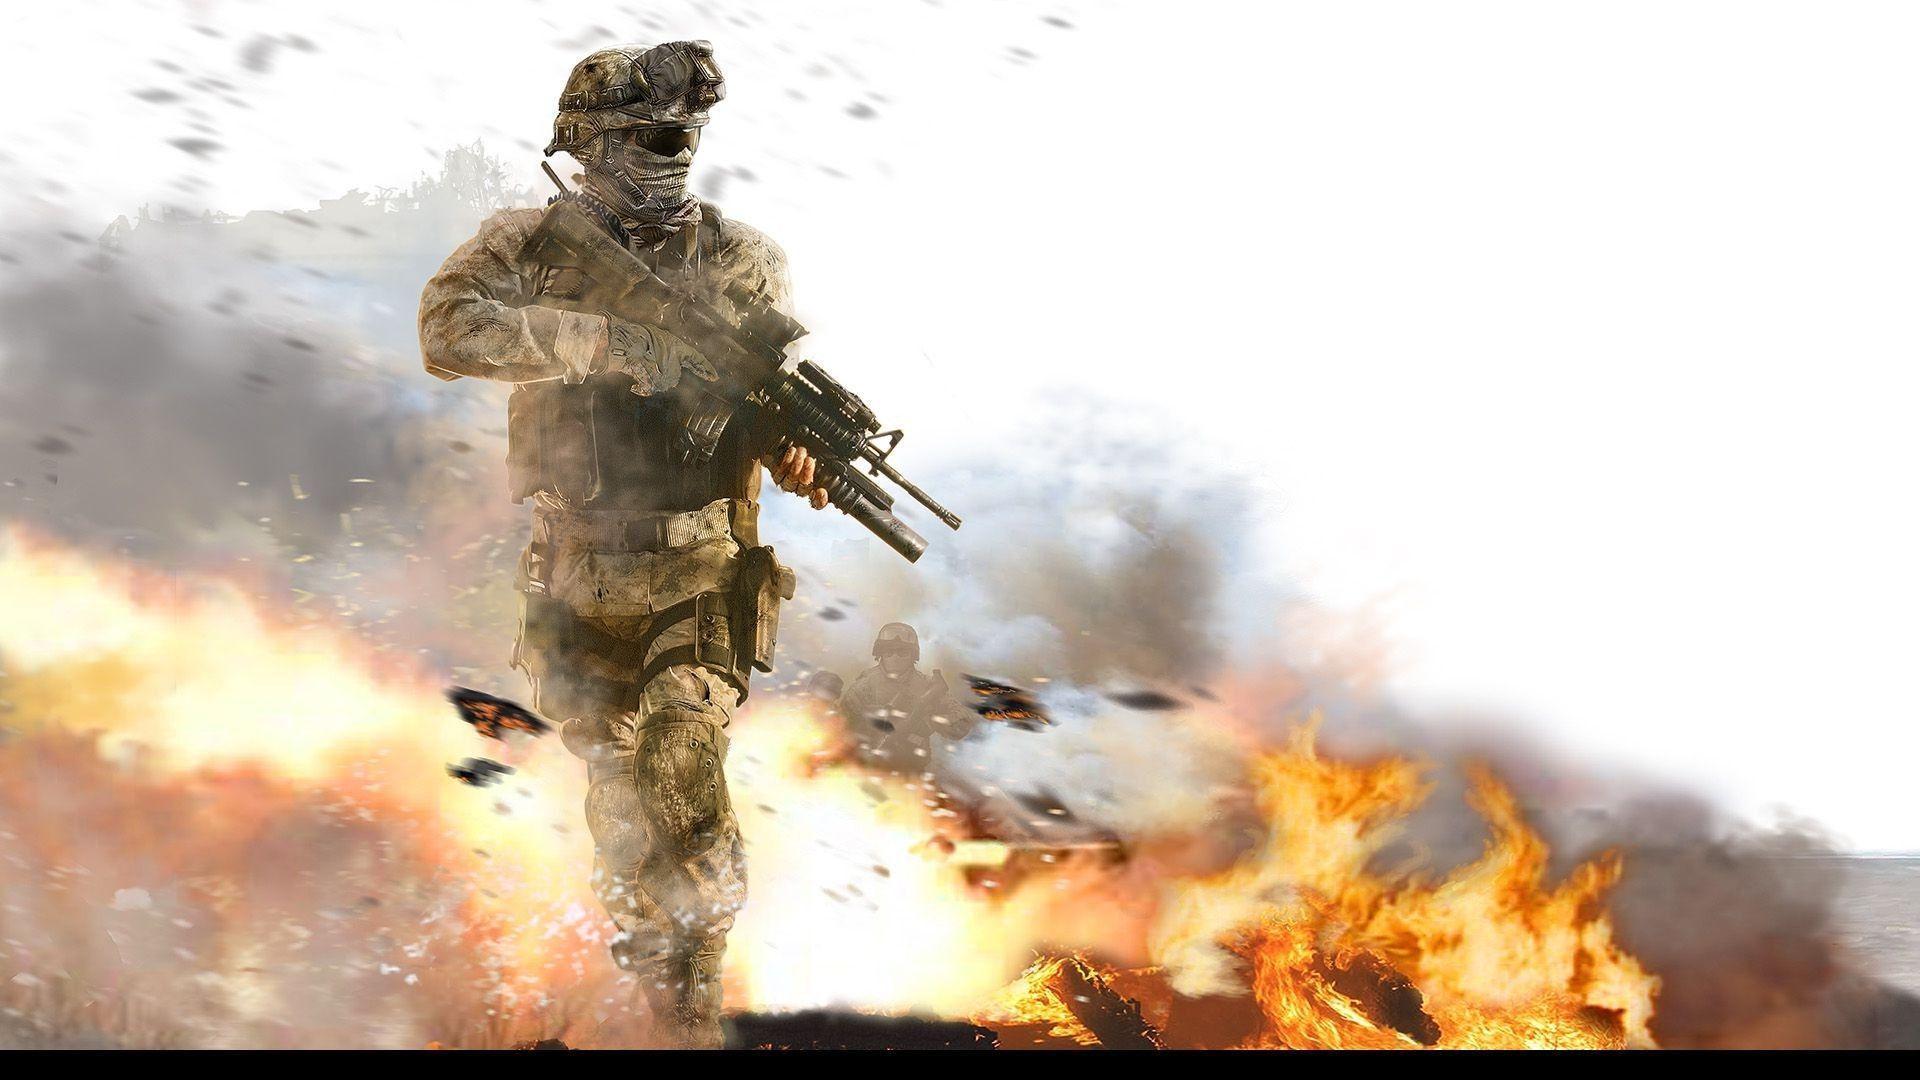 ZZL:78 Of Duty Modern Warfare 2 HD Image Free Large